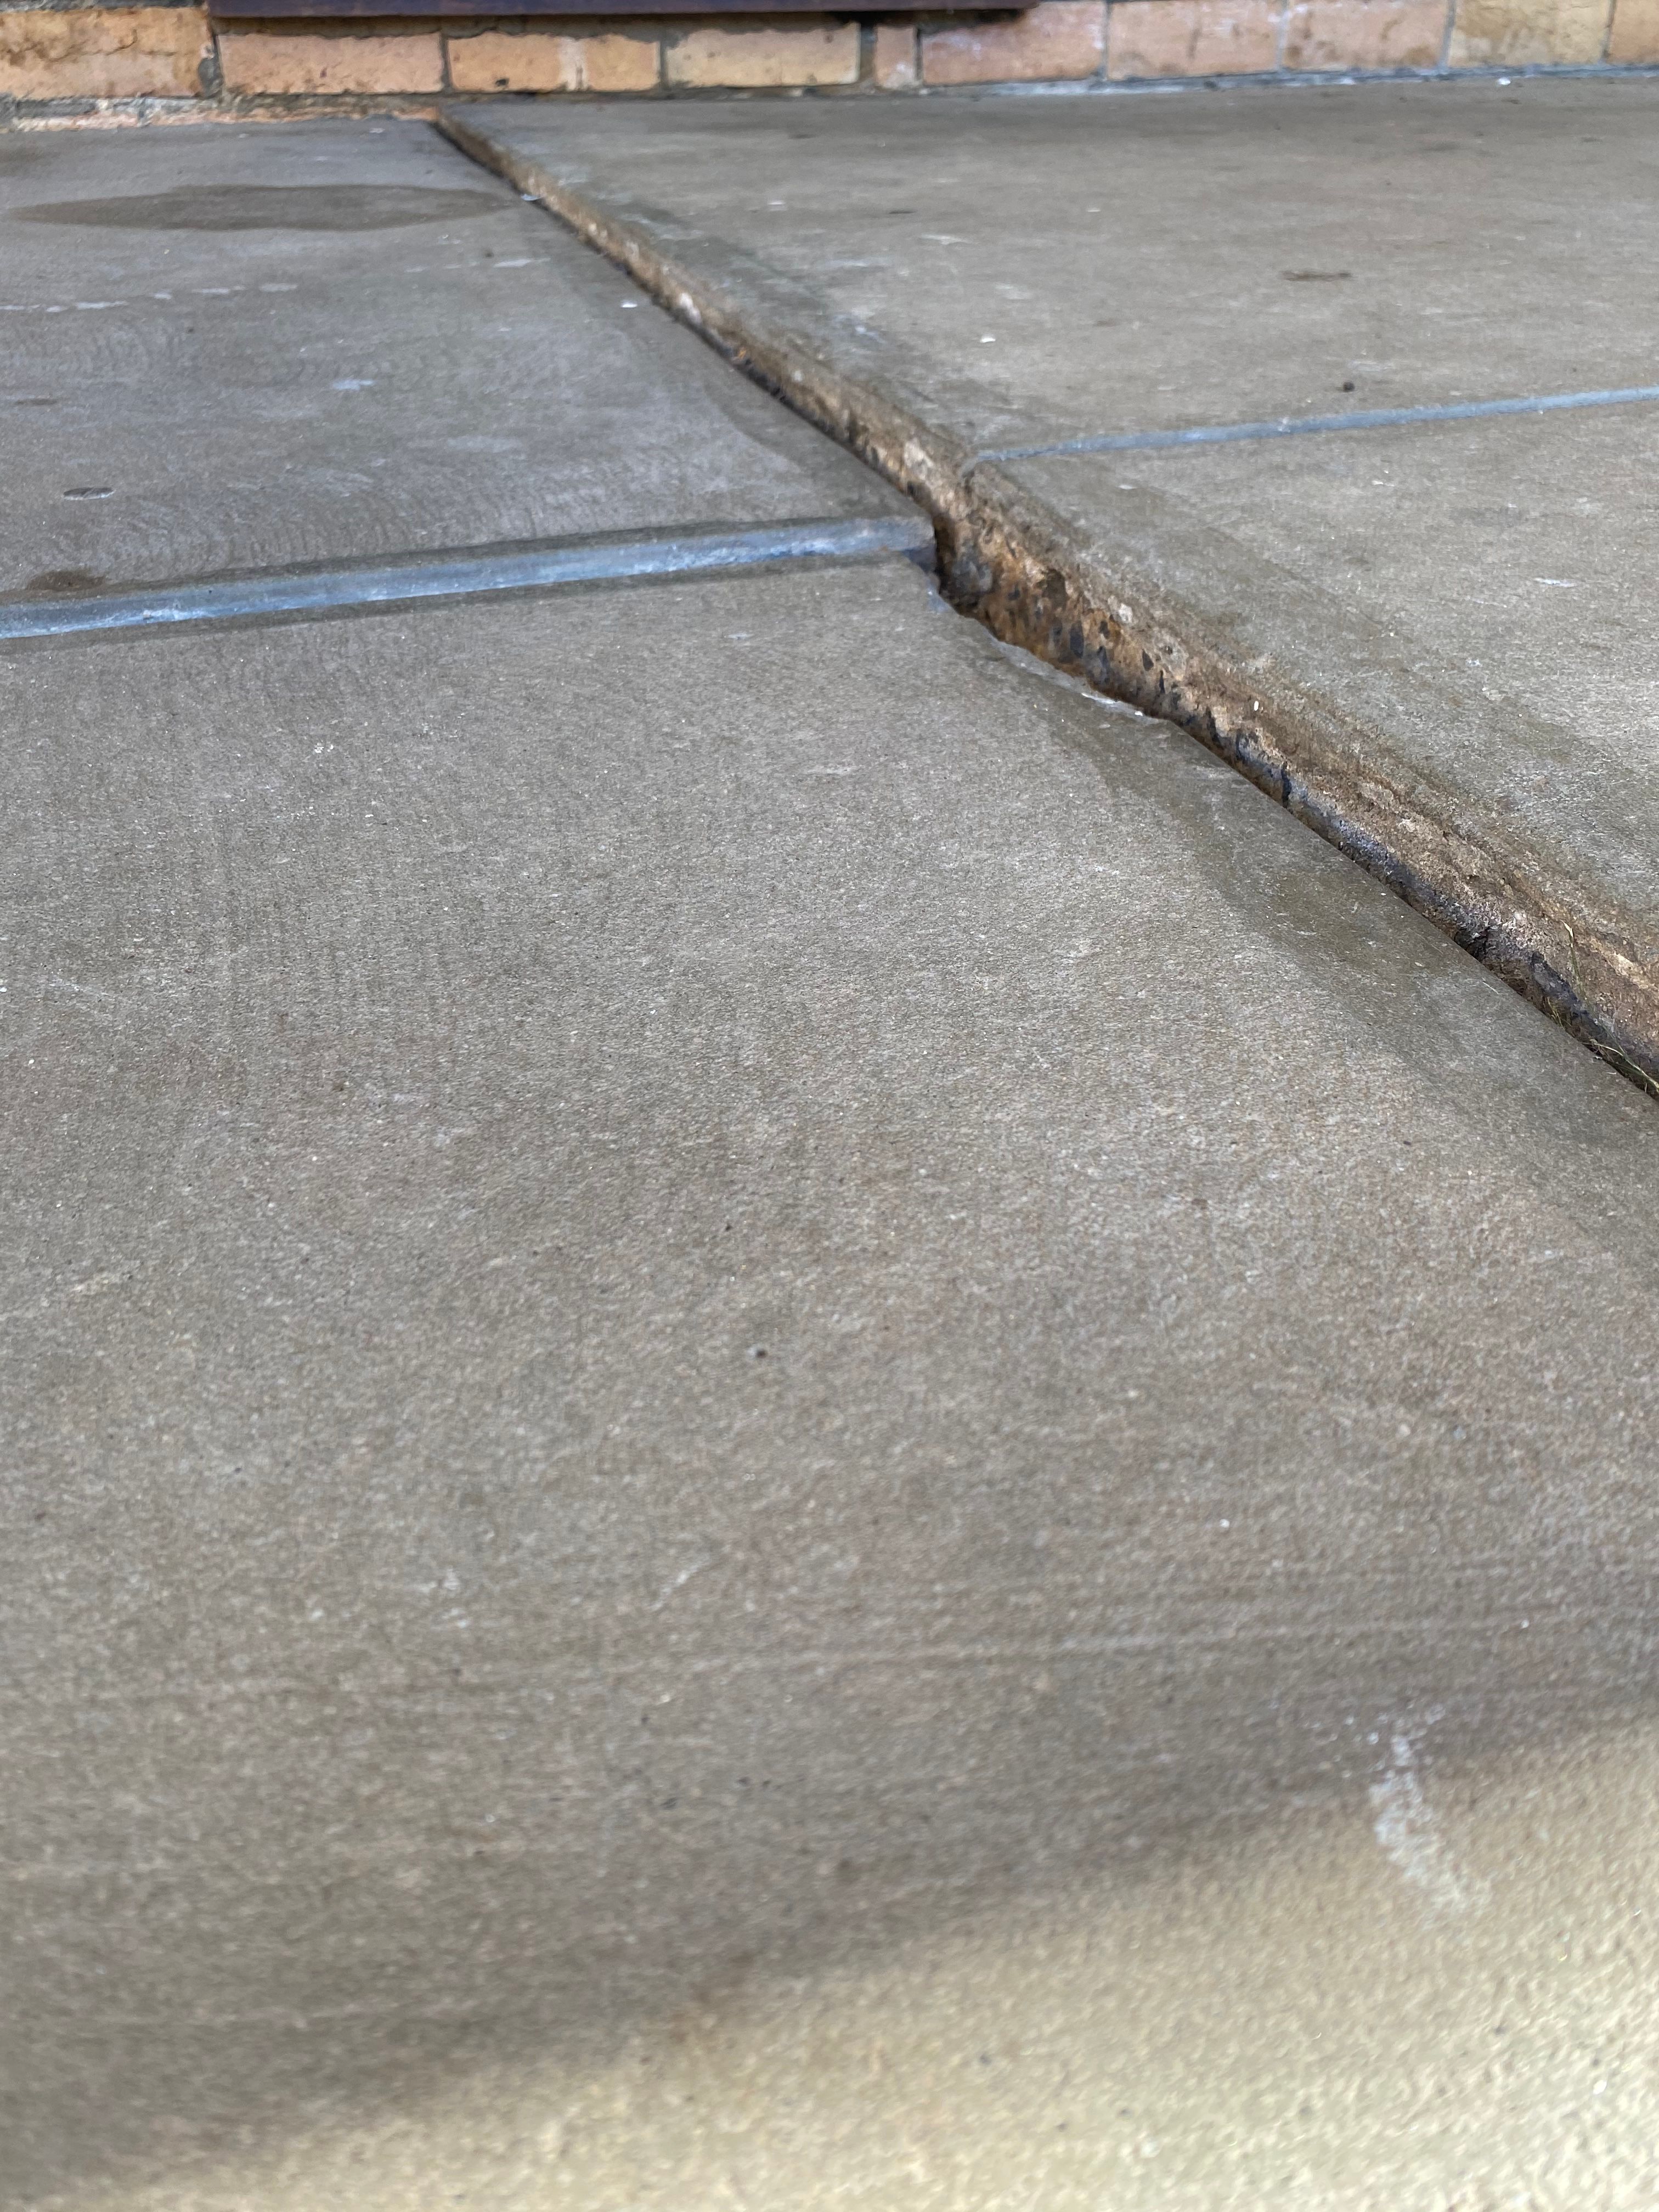 Patio concrete slabs dropped | Bunnings Workshop community